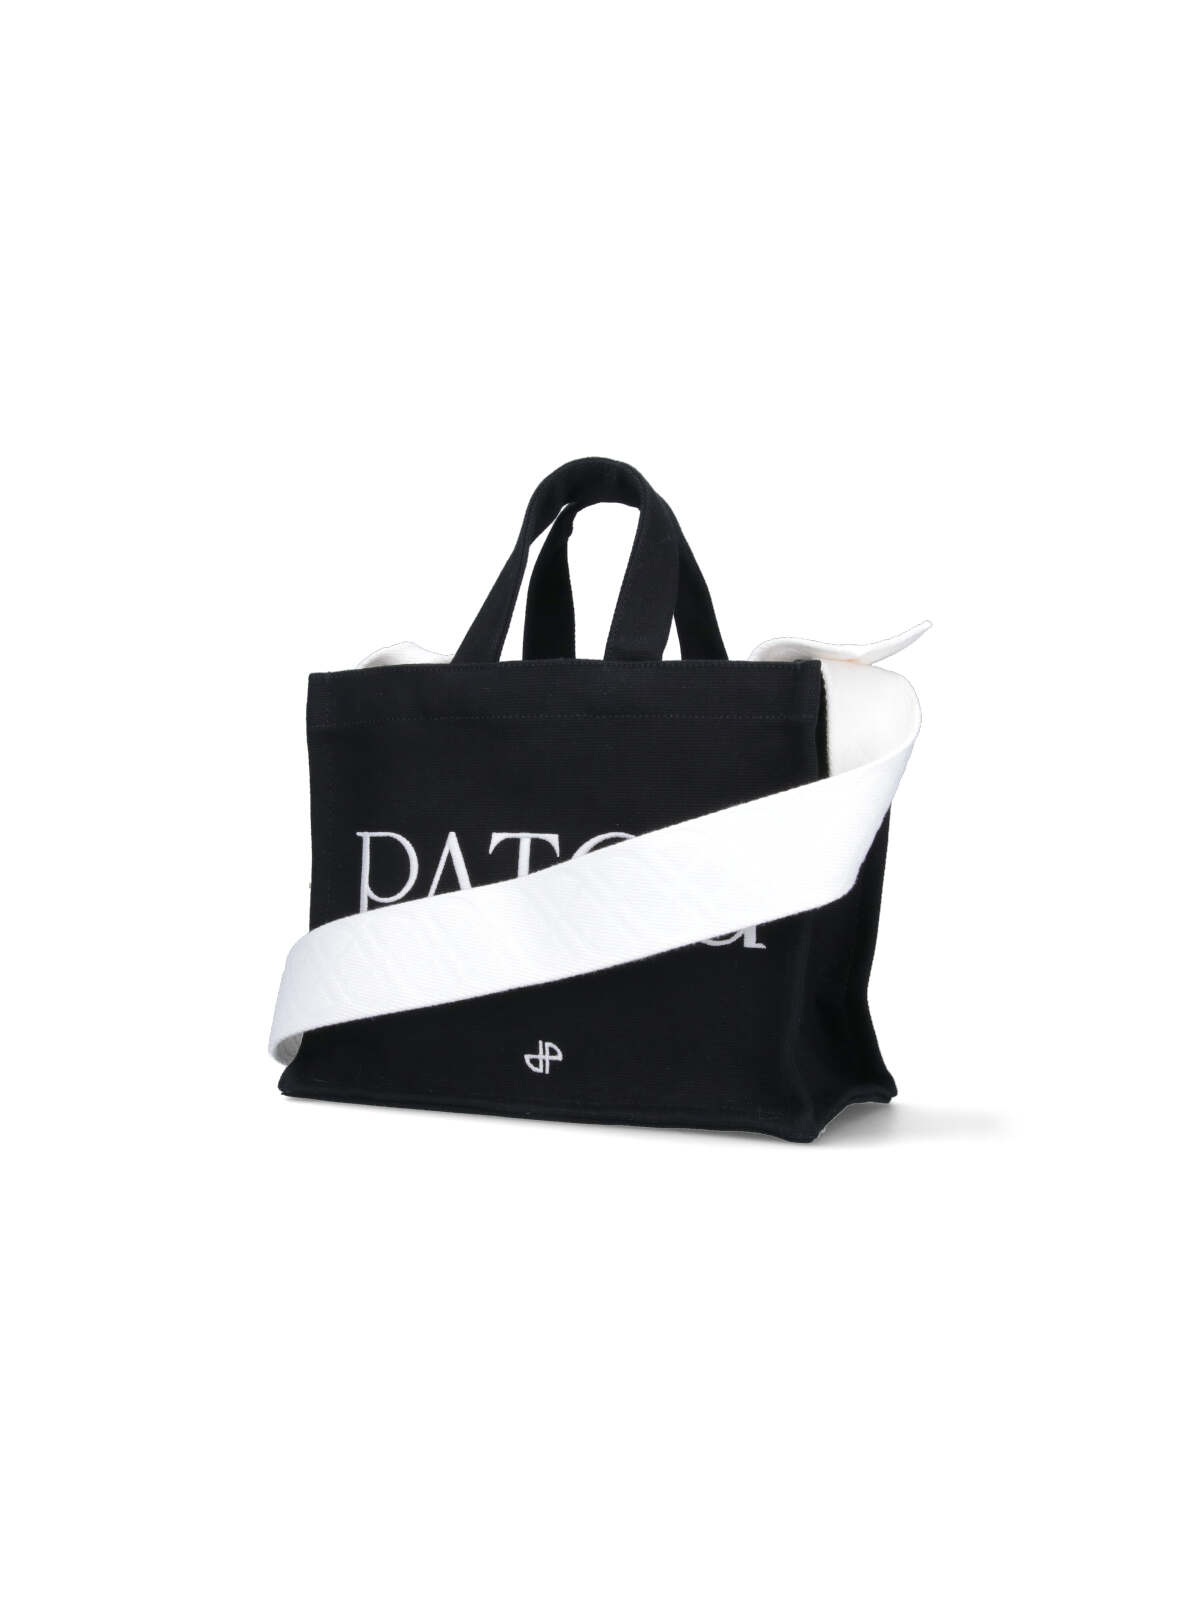 Shop Patou Logo Tote Bag In Black